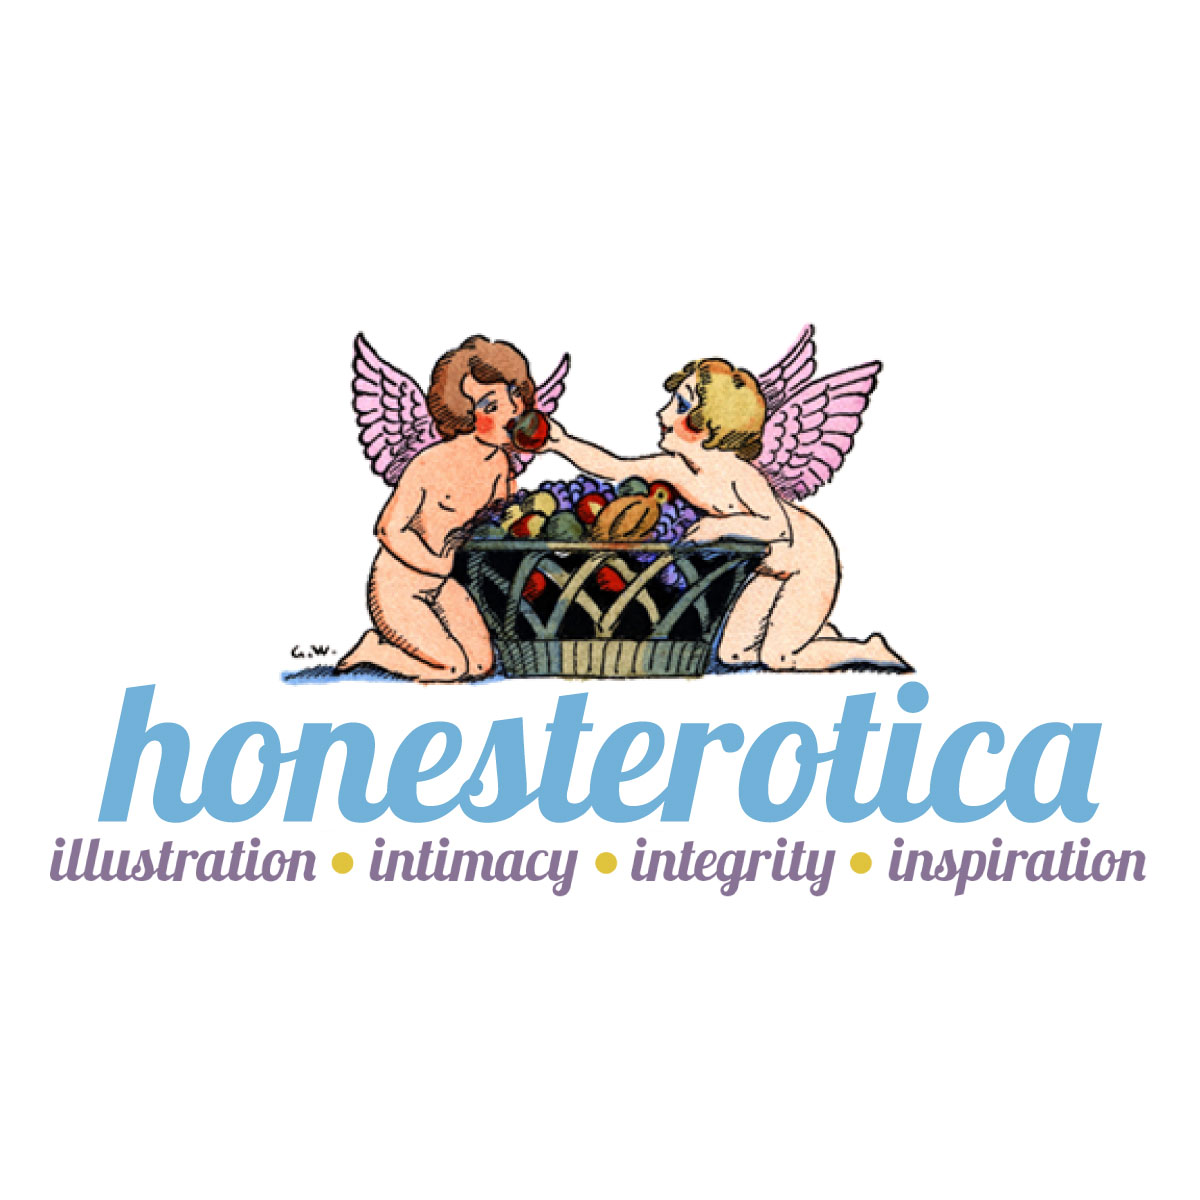 honesterotica | illustration, intimacy, integrity and inspiration